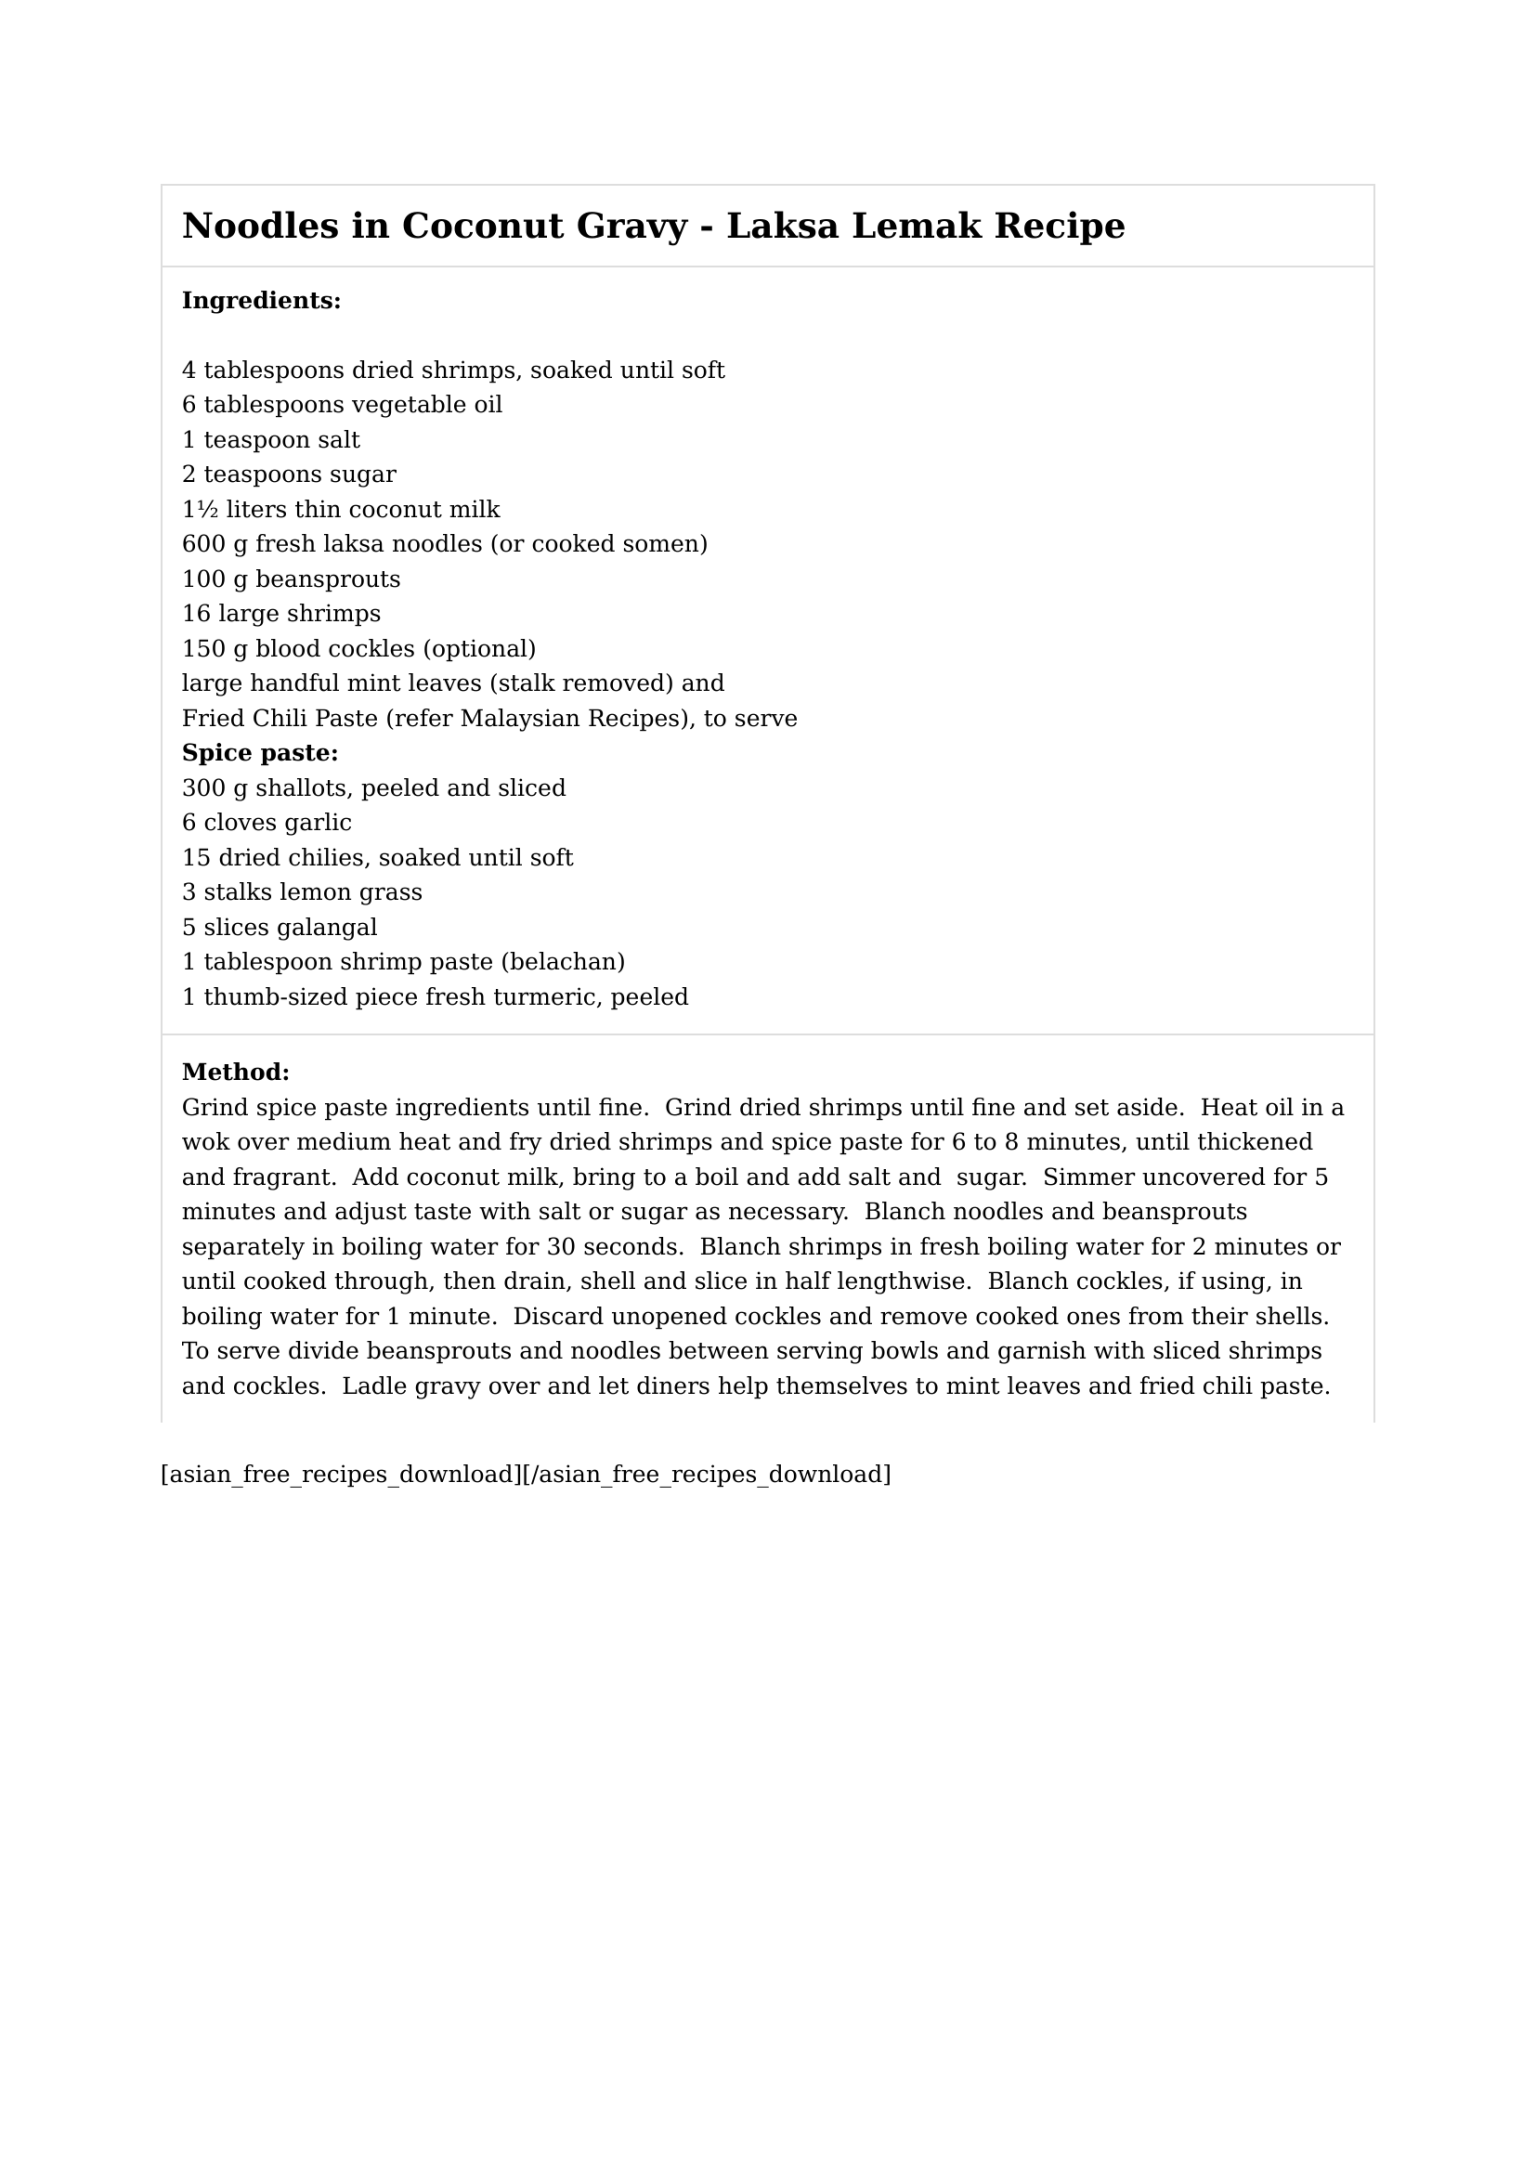 Noodles in Coconut Gravy - Laksa Lemak Recipe